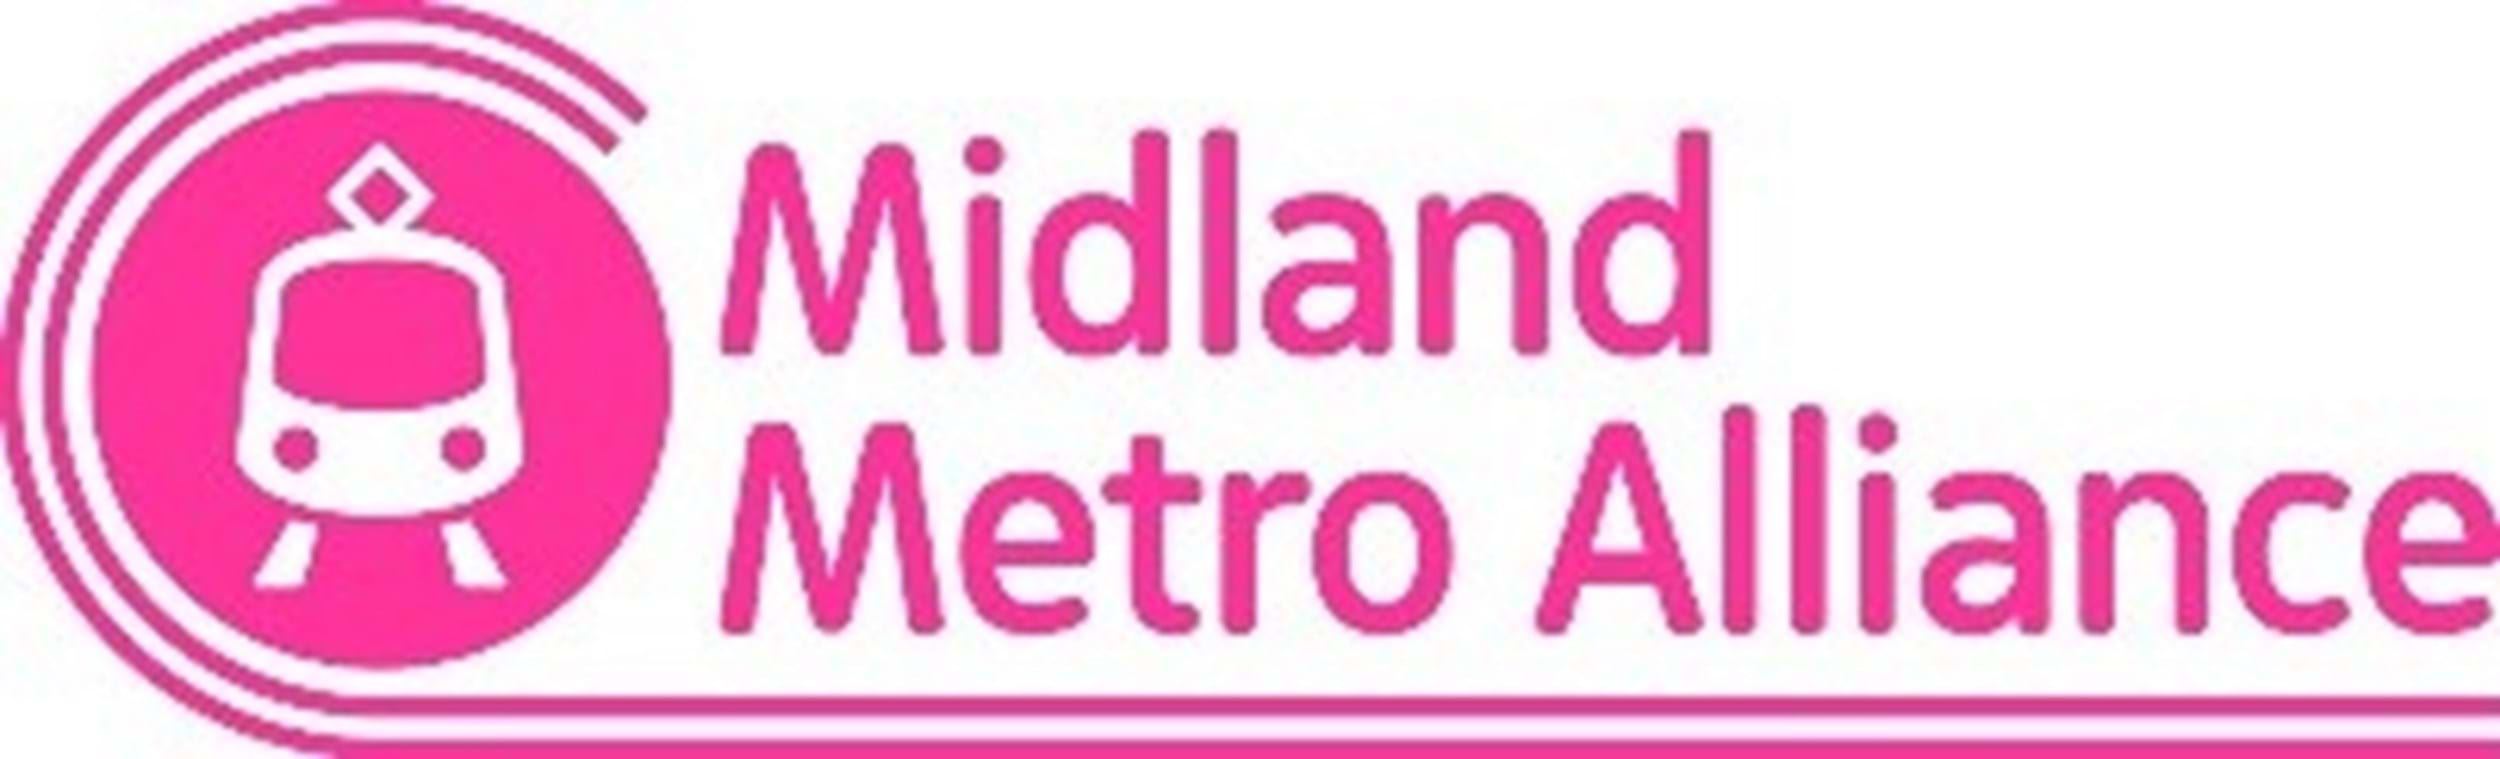 Midland Metro Alliance